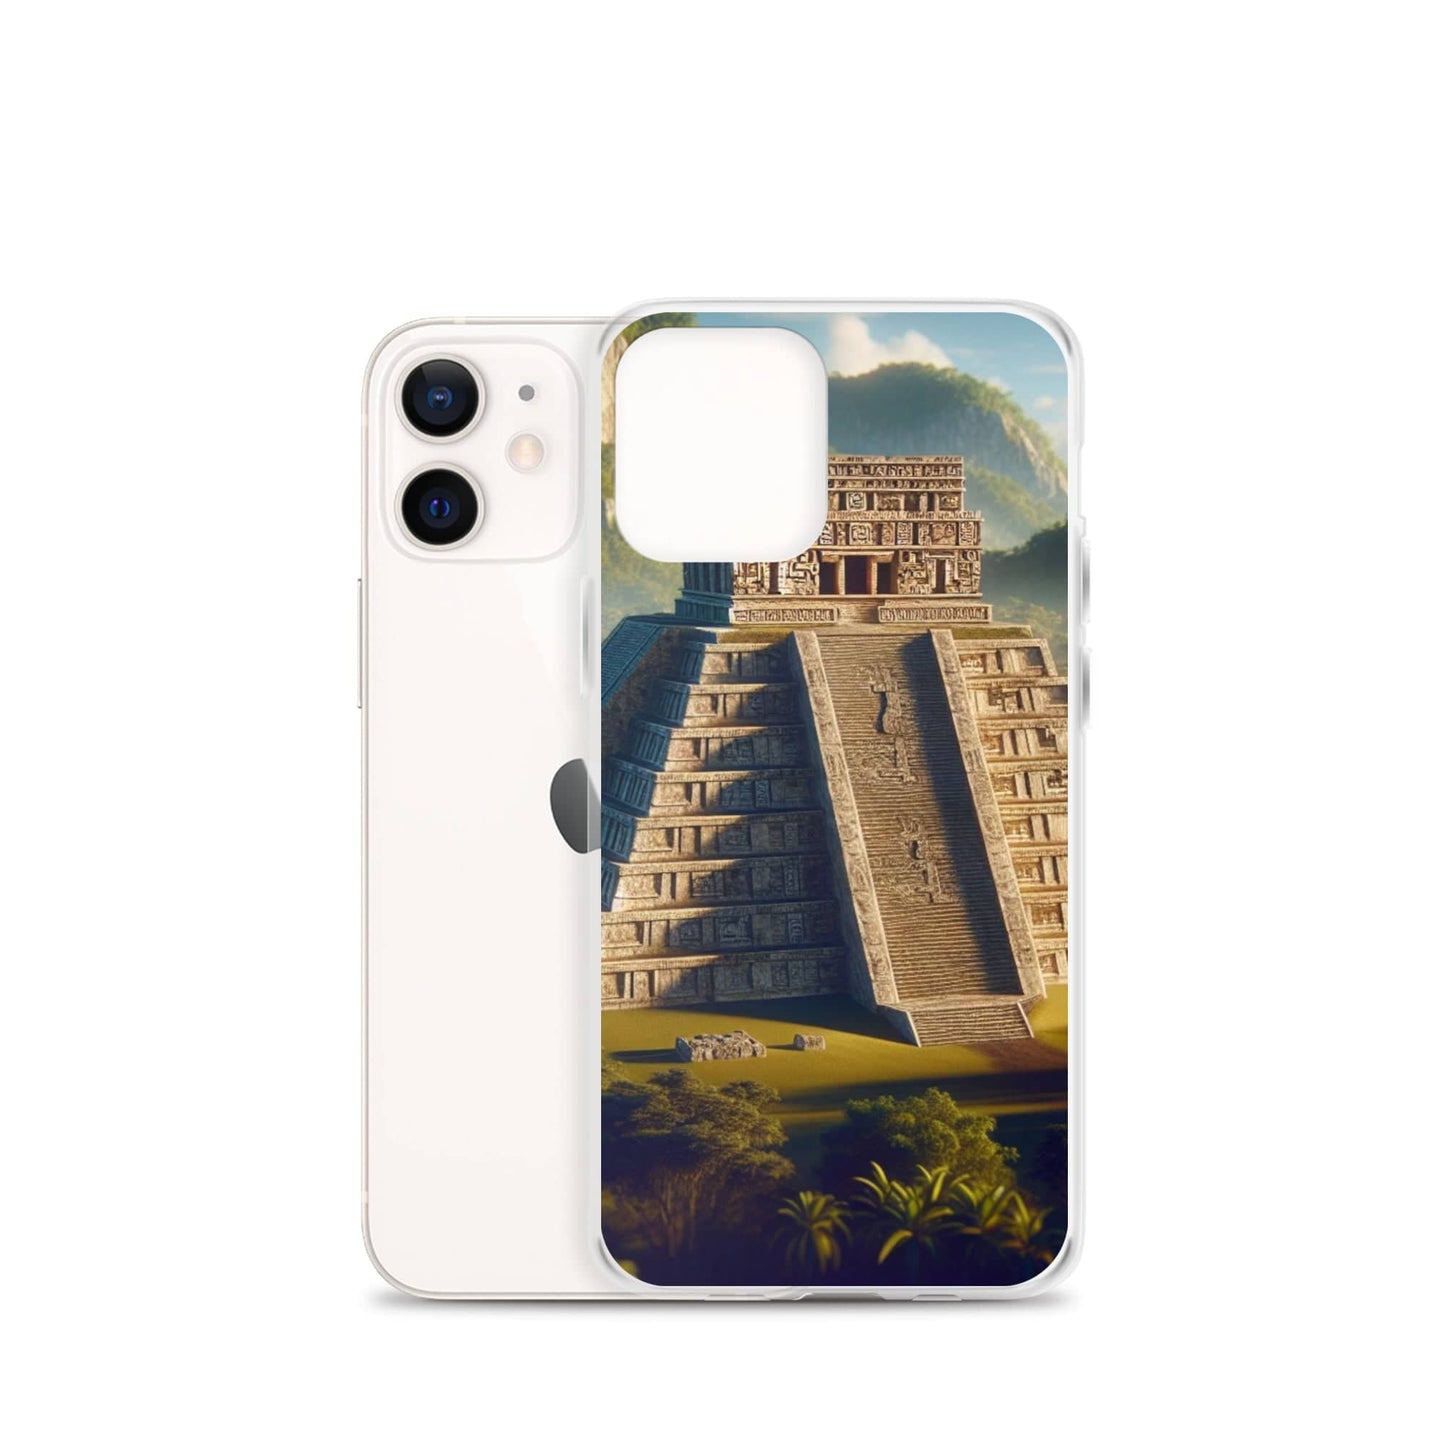 Maya Temple IPhone Case